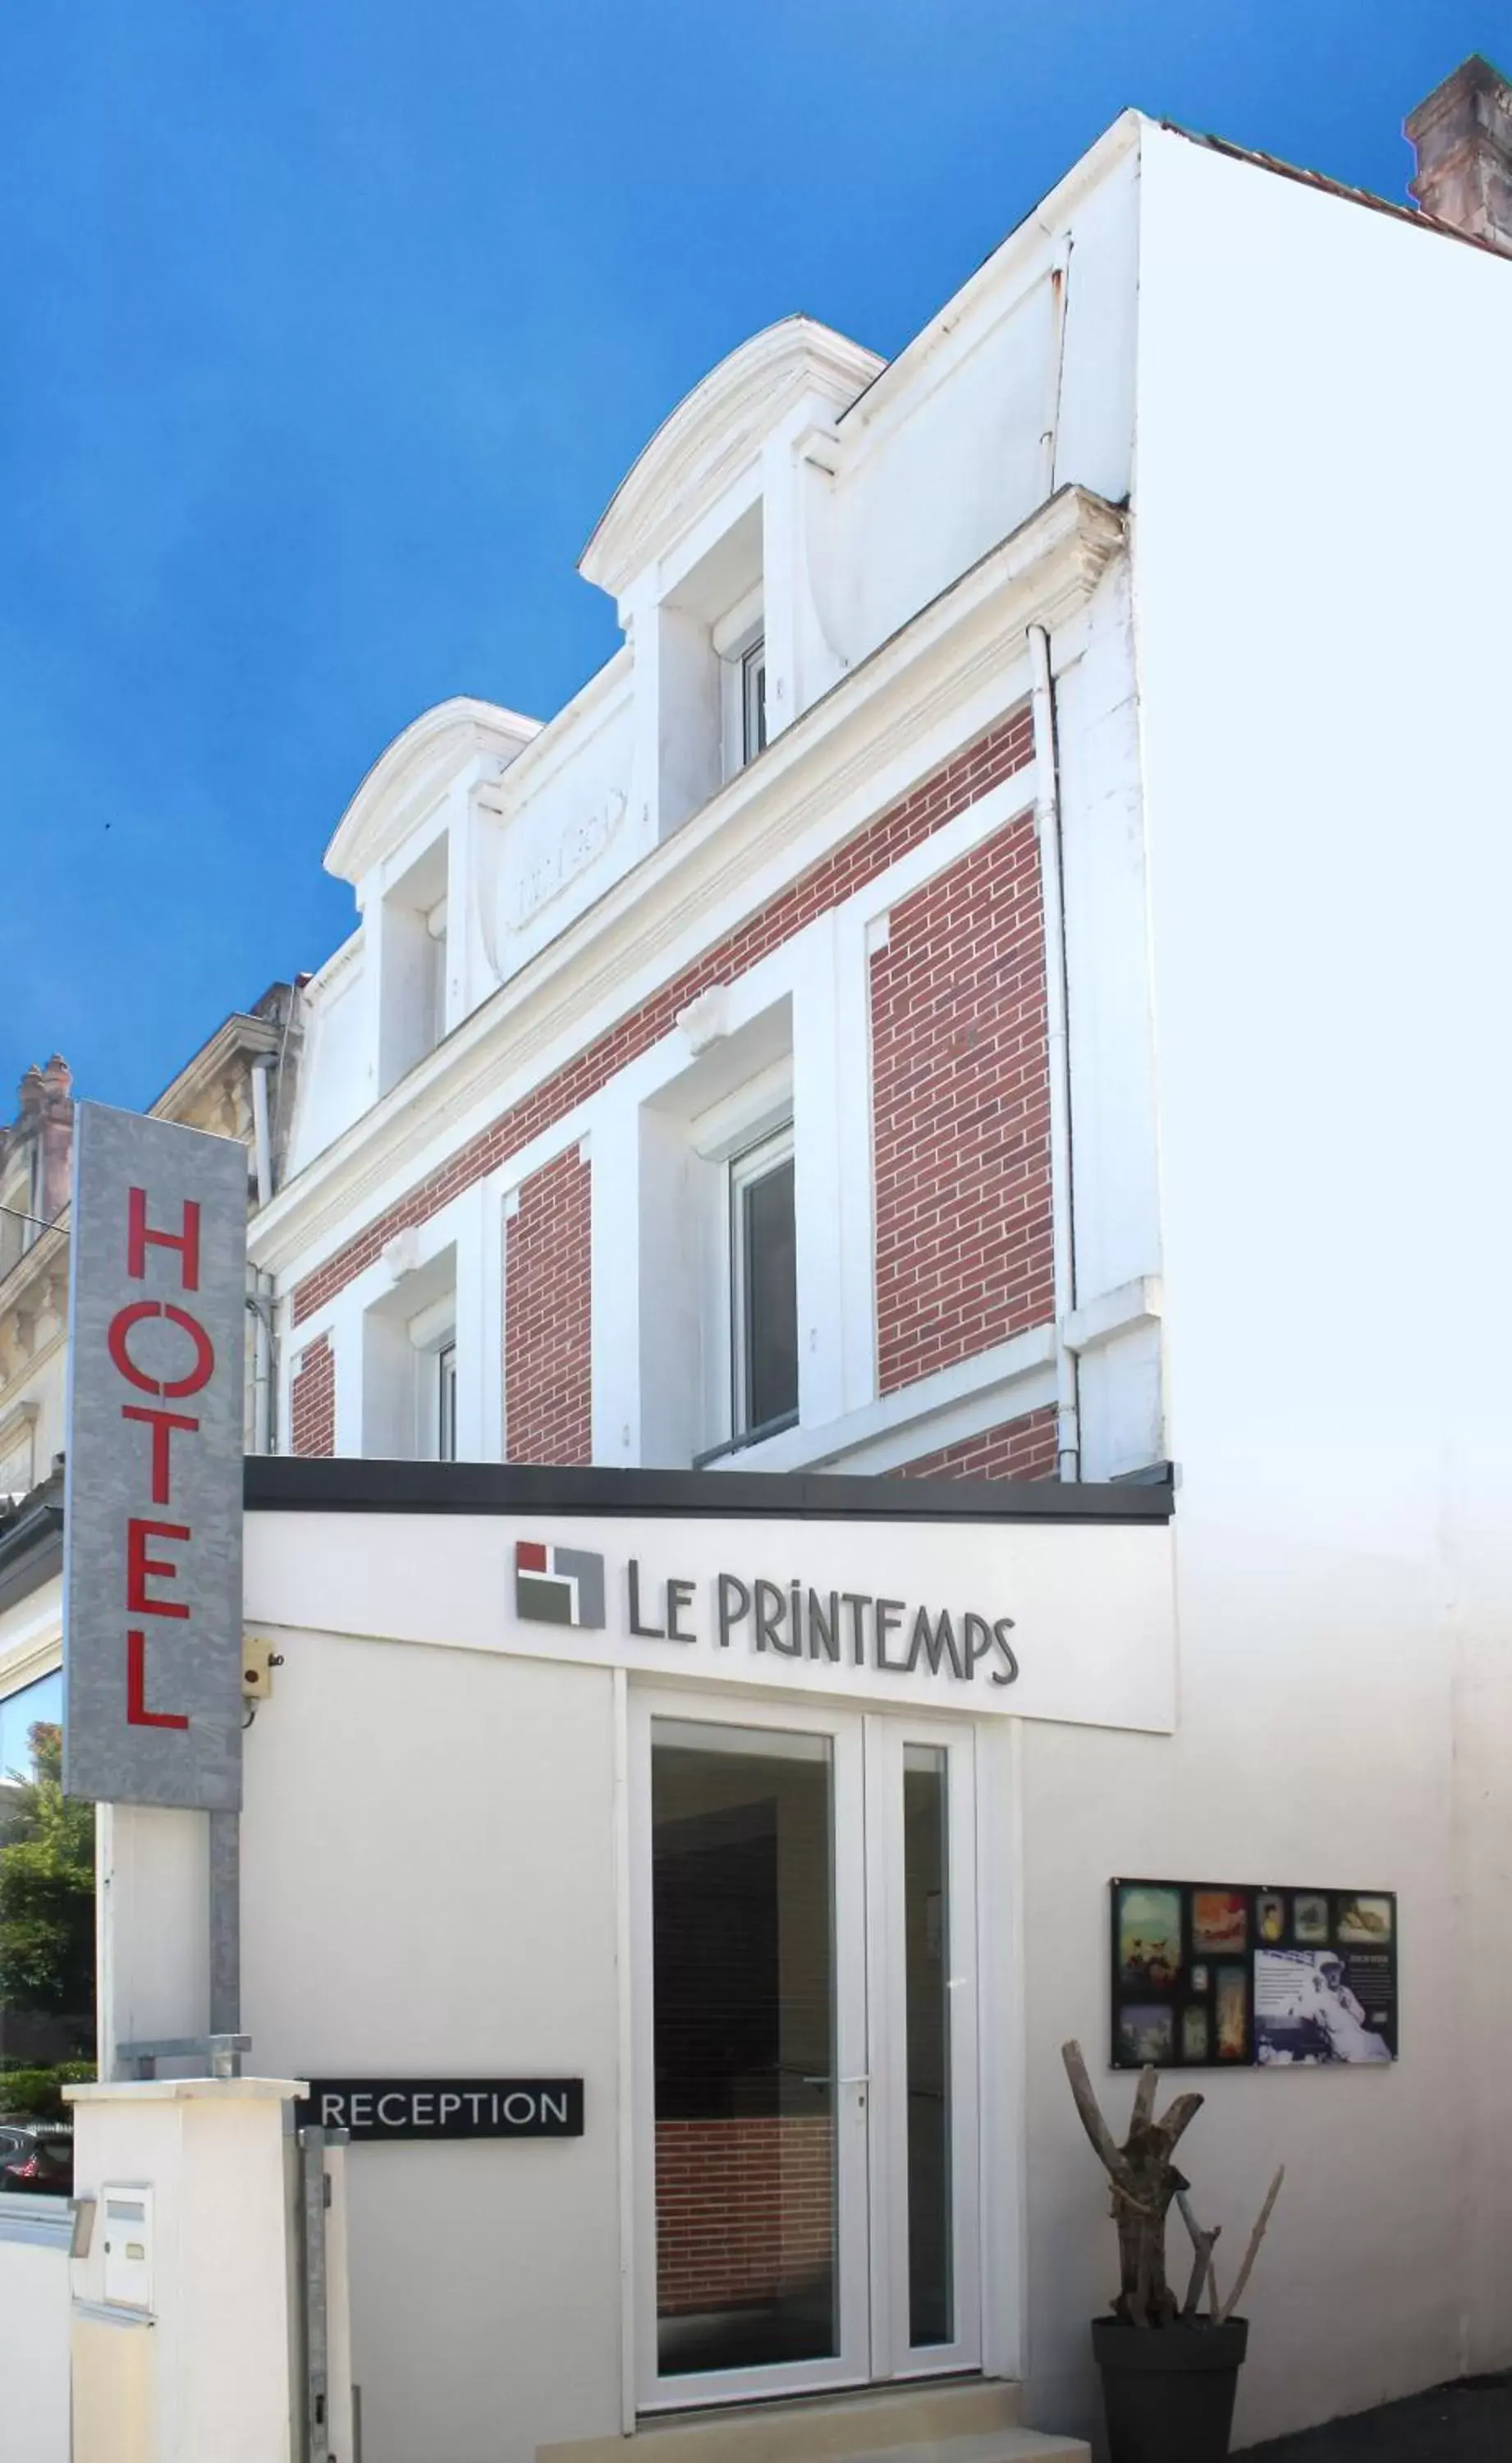 Property logo or sign, Property Building in Hôtel Le Printemps